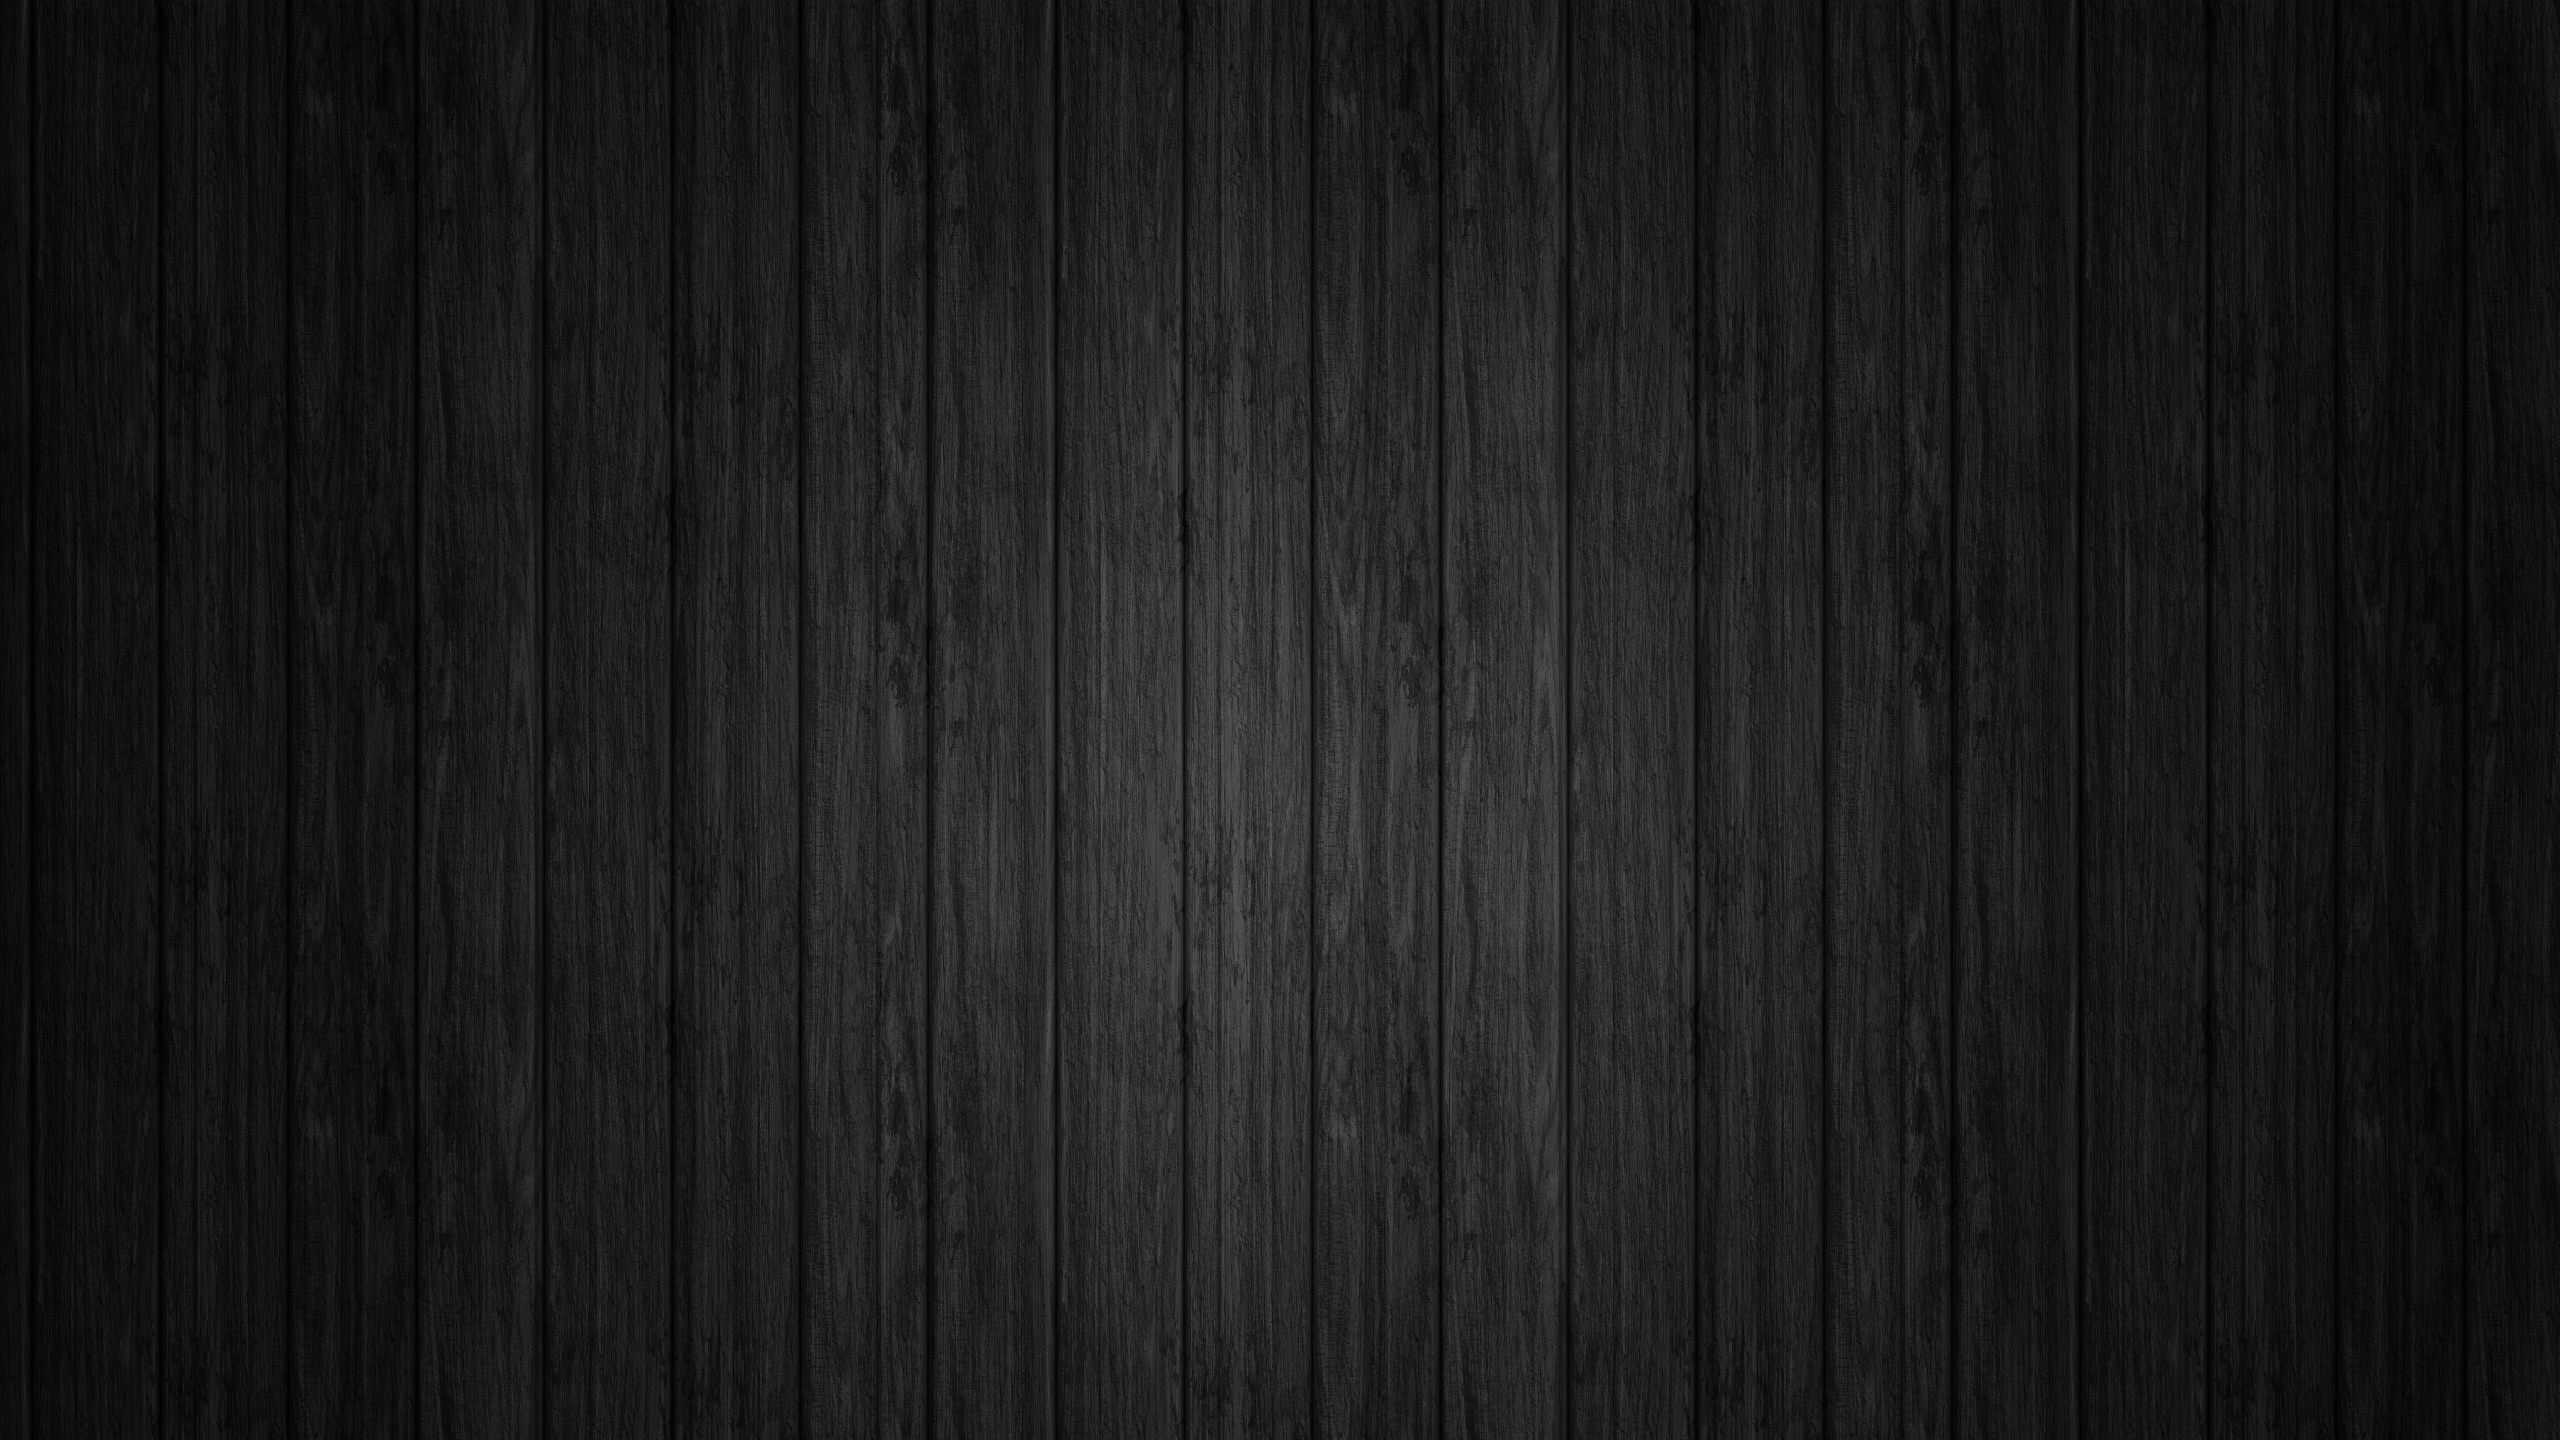 Dark Wood Texture Wallpaper for Social Media YouTube Channel Art